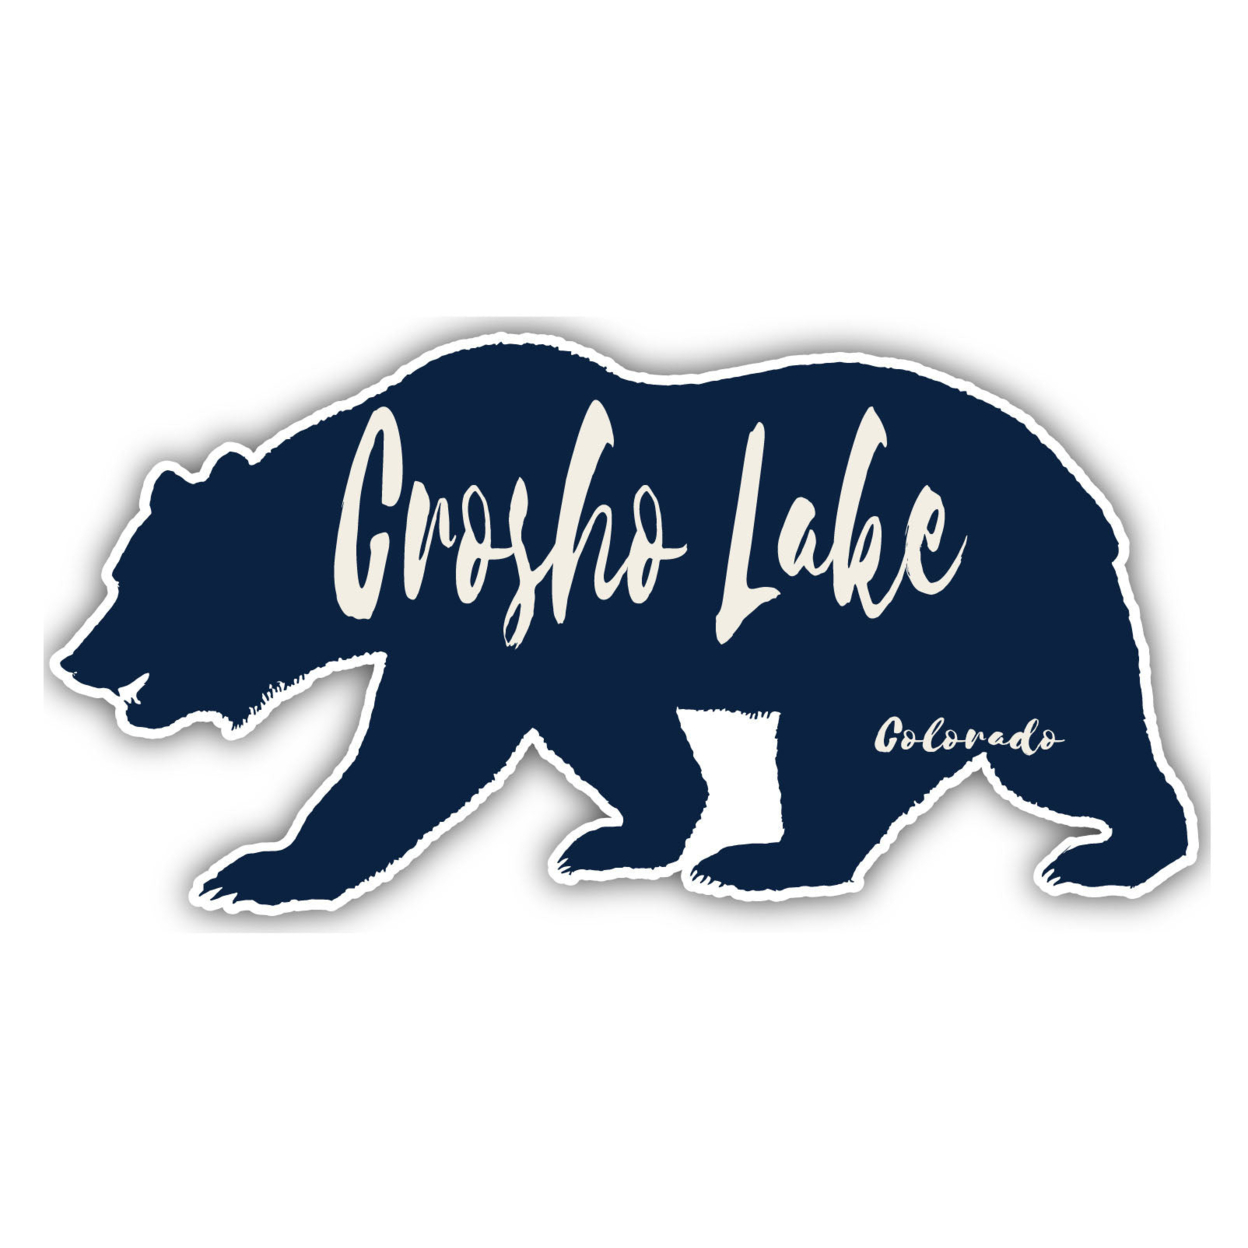 Crosho Lake Colorado Souvenir Decorative Stickers (Choose Theme And Size) - Single Unit, 4-Inch, Bear